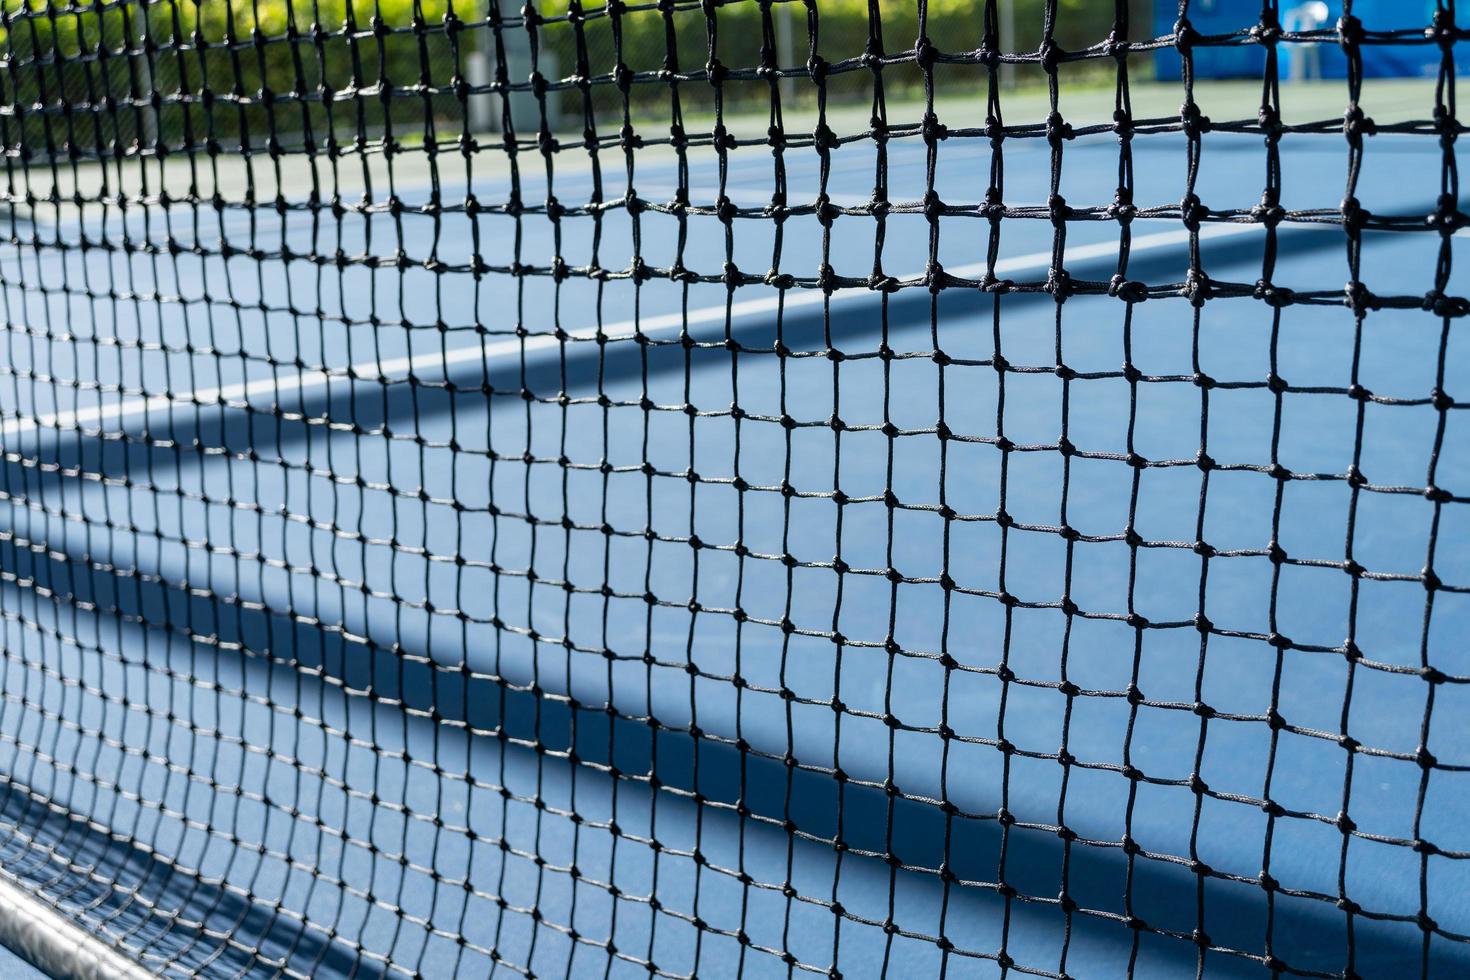 outdoor tennis sports net background photo